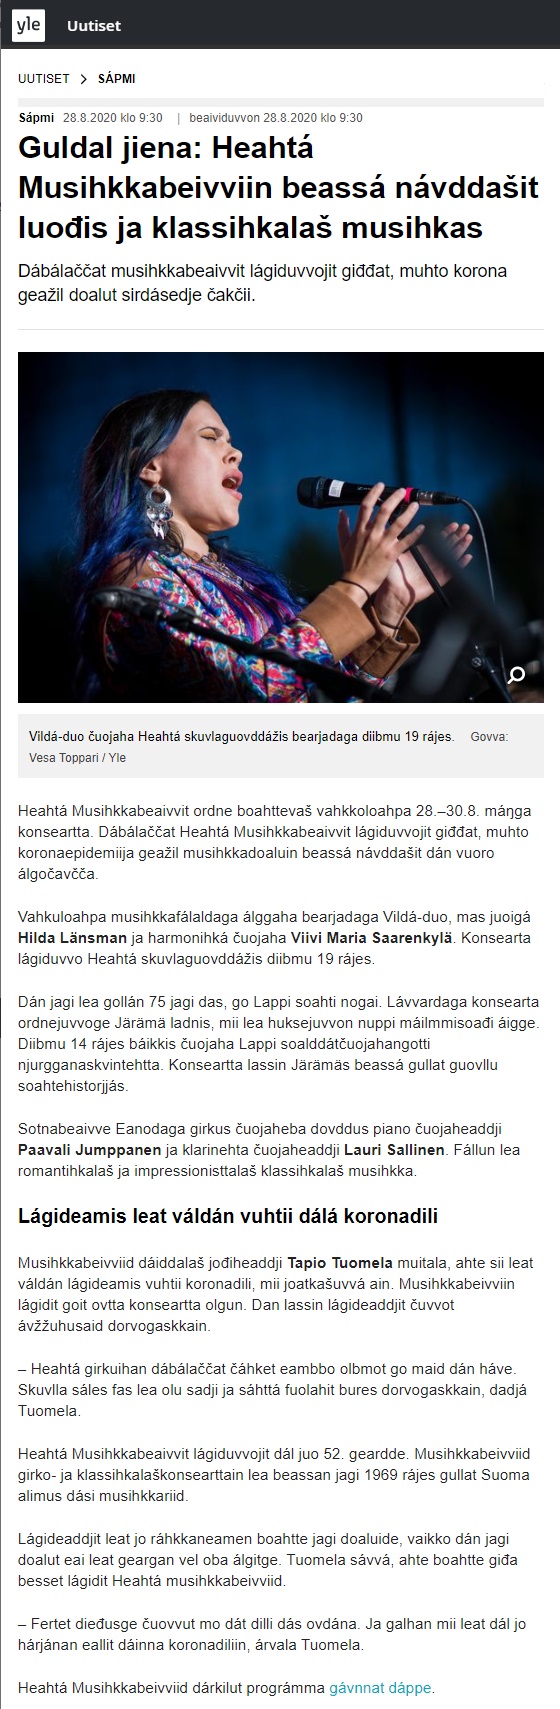 Yle Sápmi (Finland), 28.8.2020